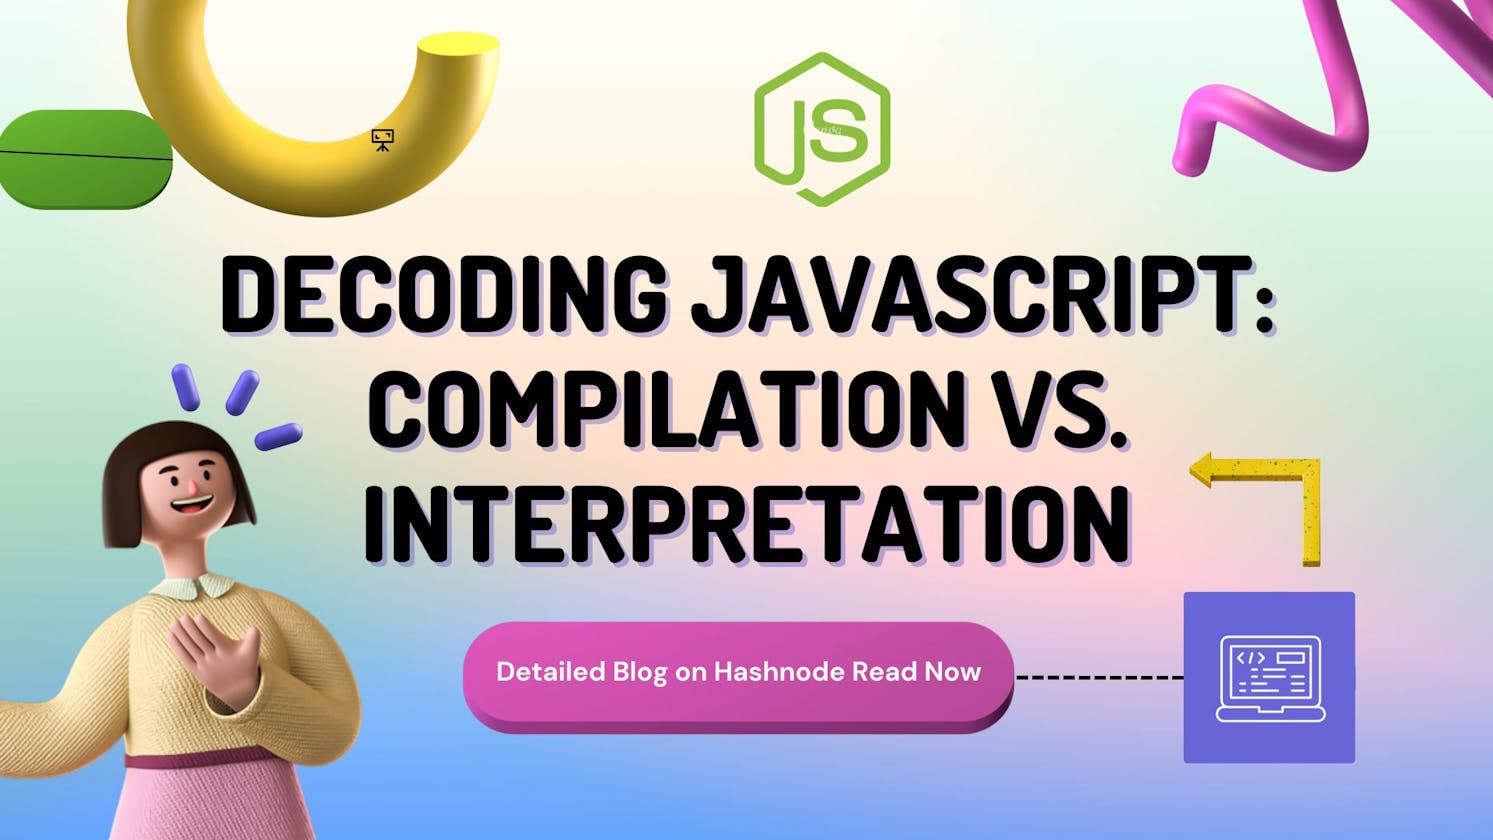 Decoding JavaScript: Compilation vs. Interpretation and Their Impact on Execution.